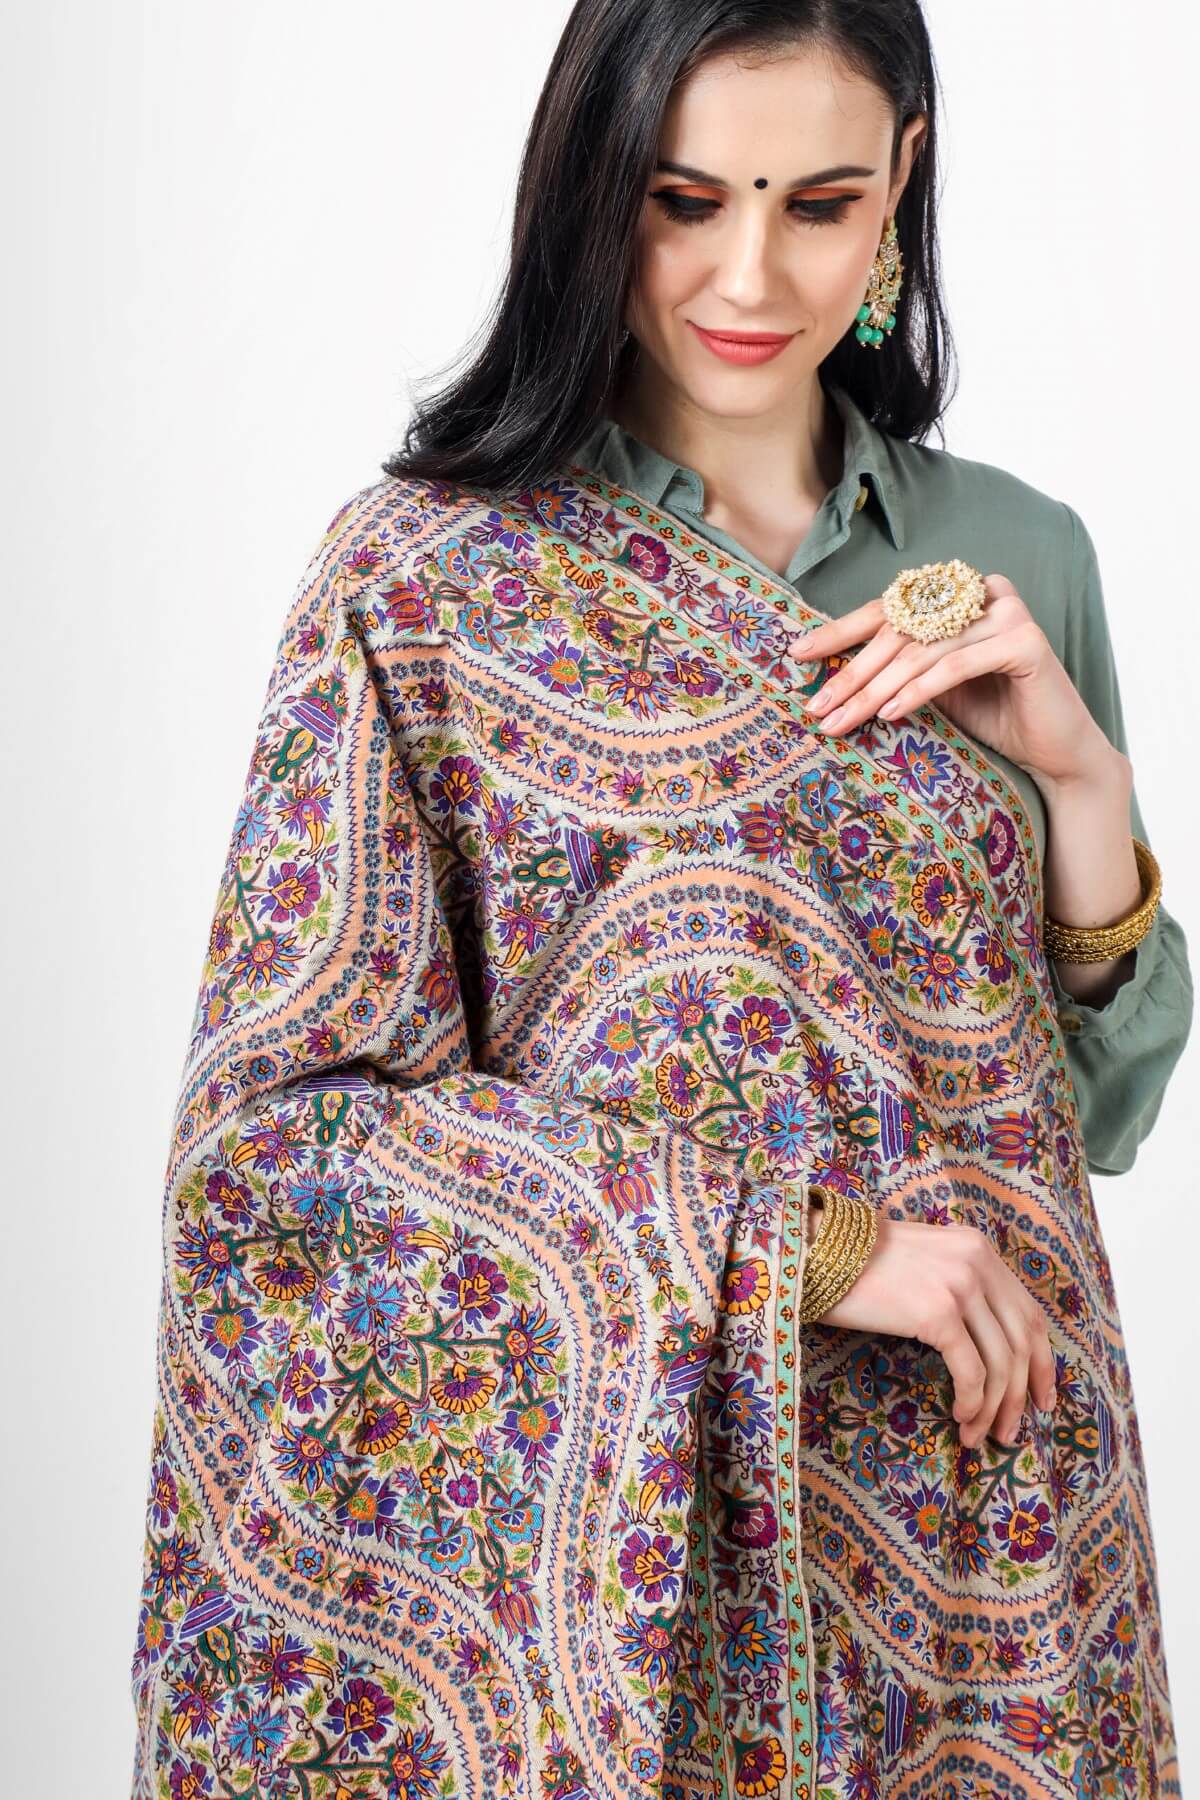 ONLINE PASHMINA - original pashmina shawls